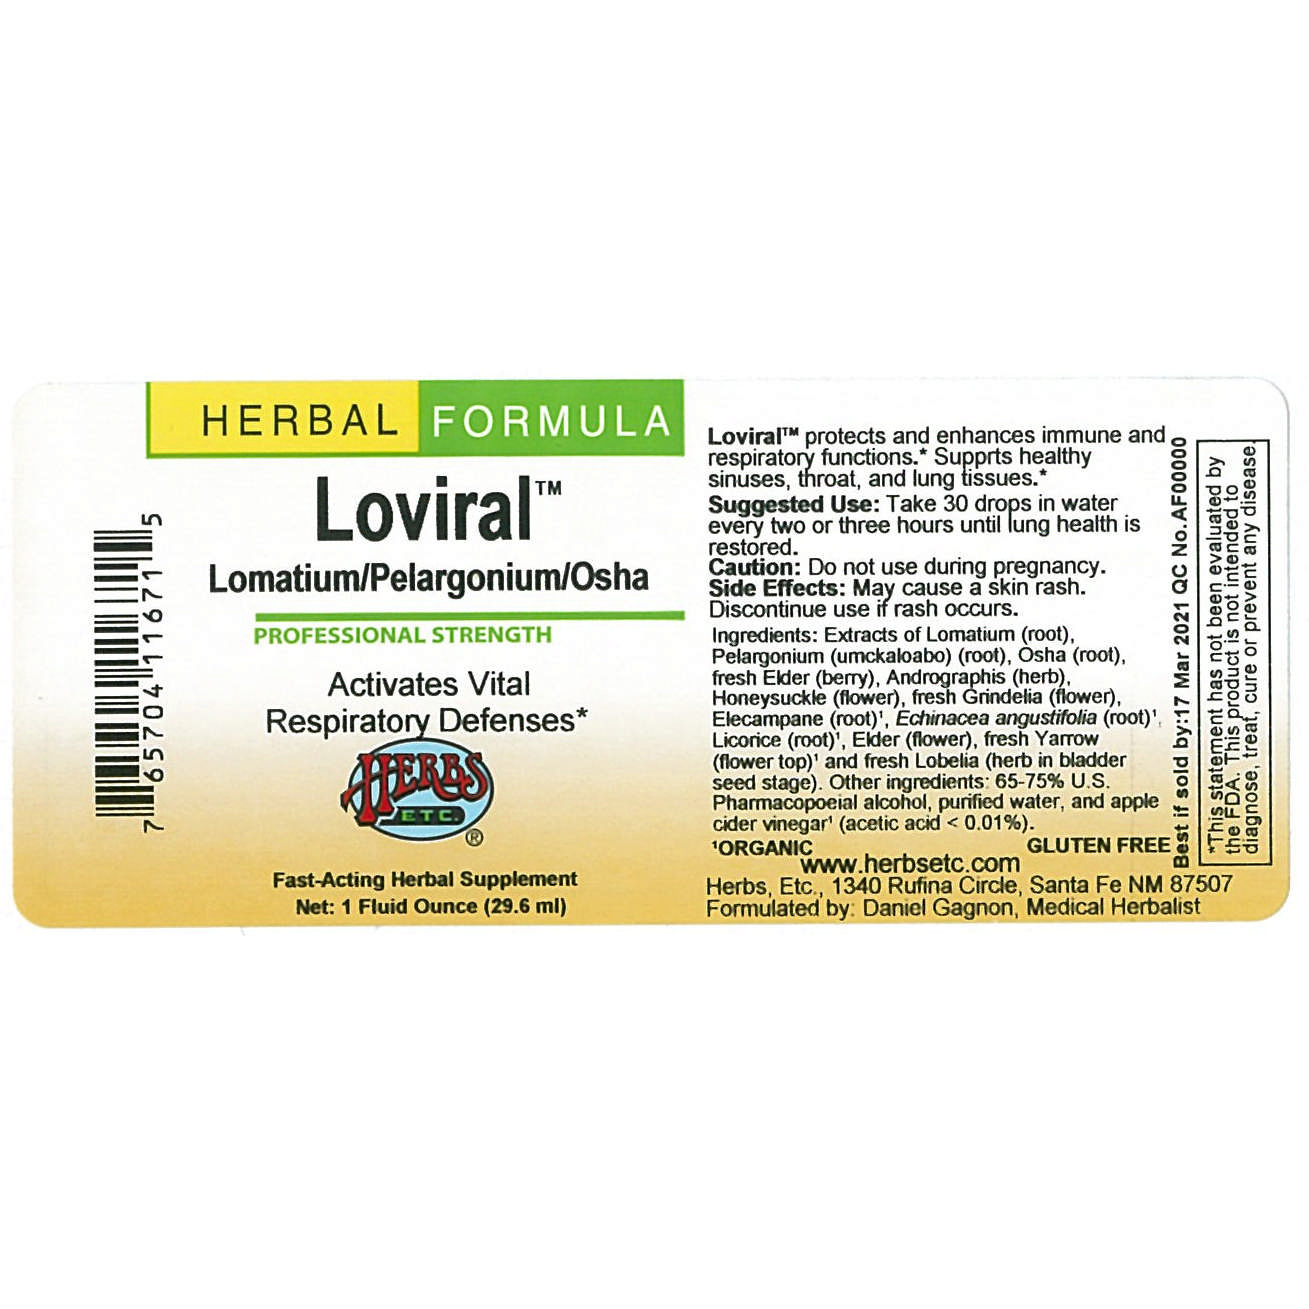 Herbs Etc - Loviral